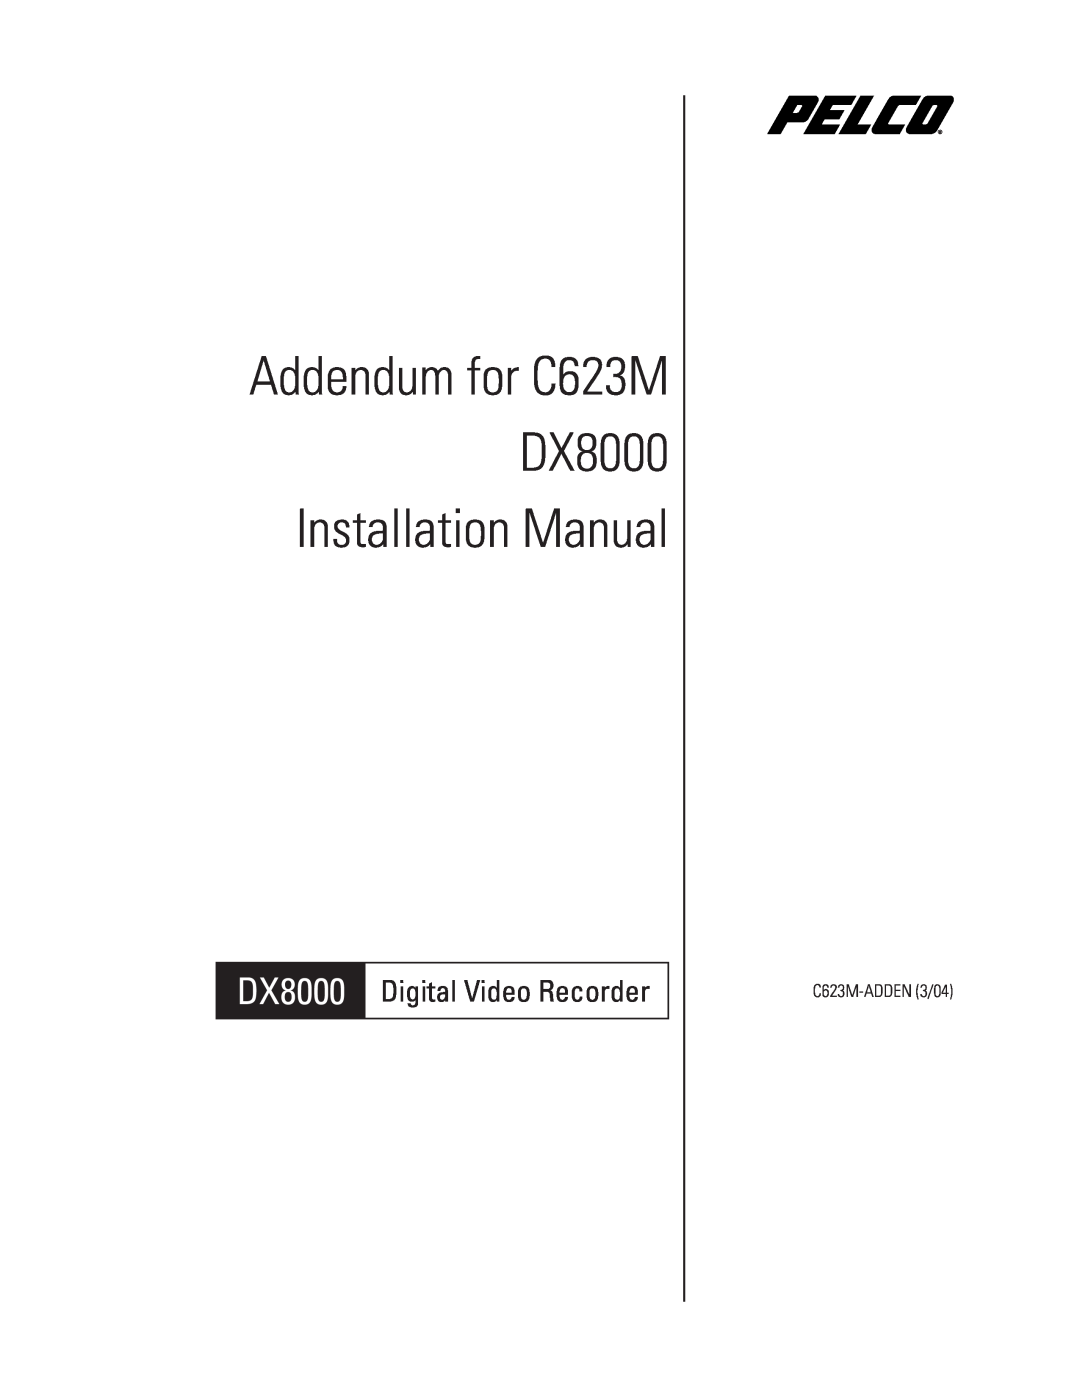 Pelco Dx8000 installation manual Addendum for C623M DX8000 Installation Manual, Digital Video Recorder, C623M-ADDEN3/04 